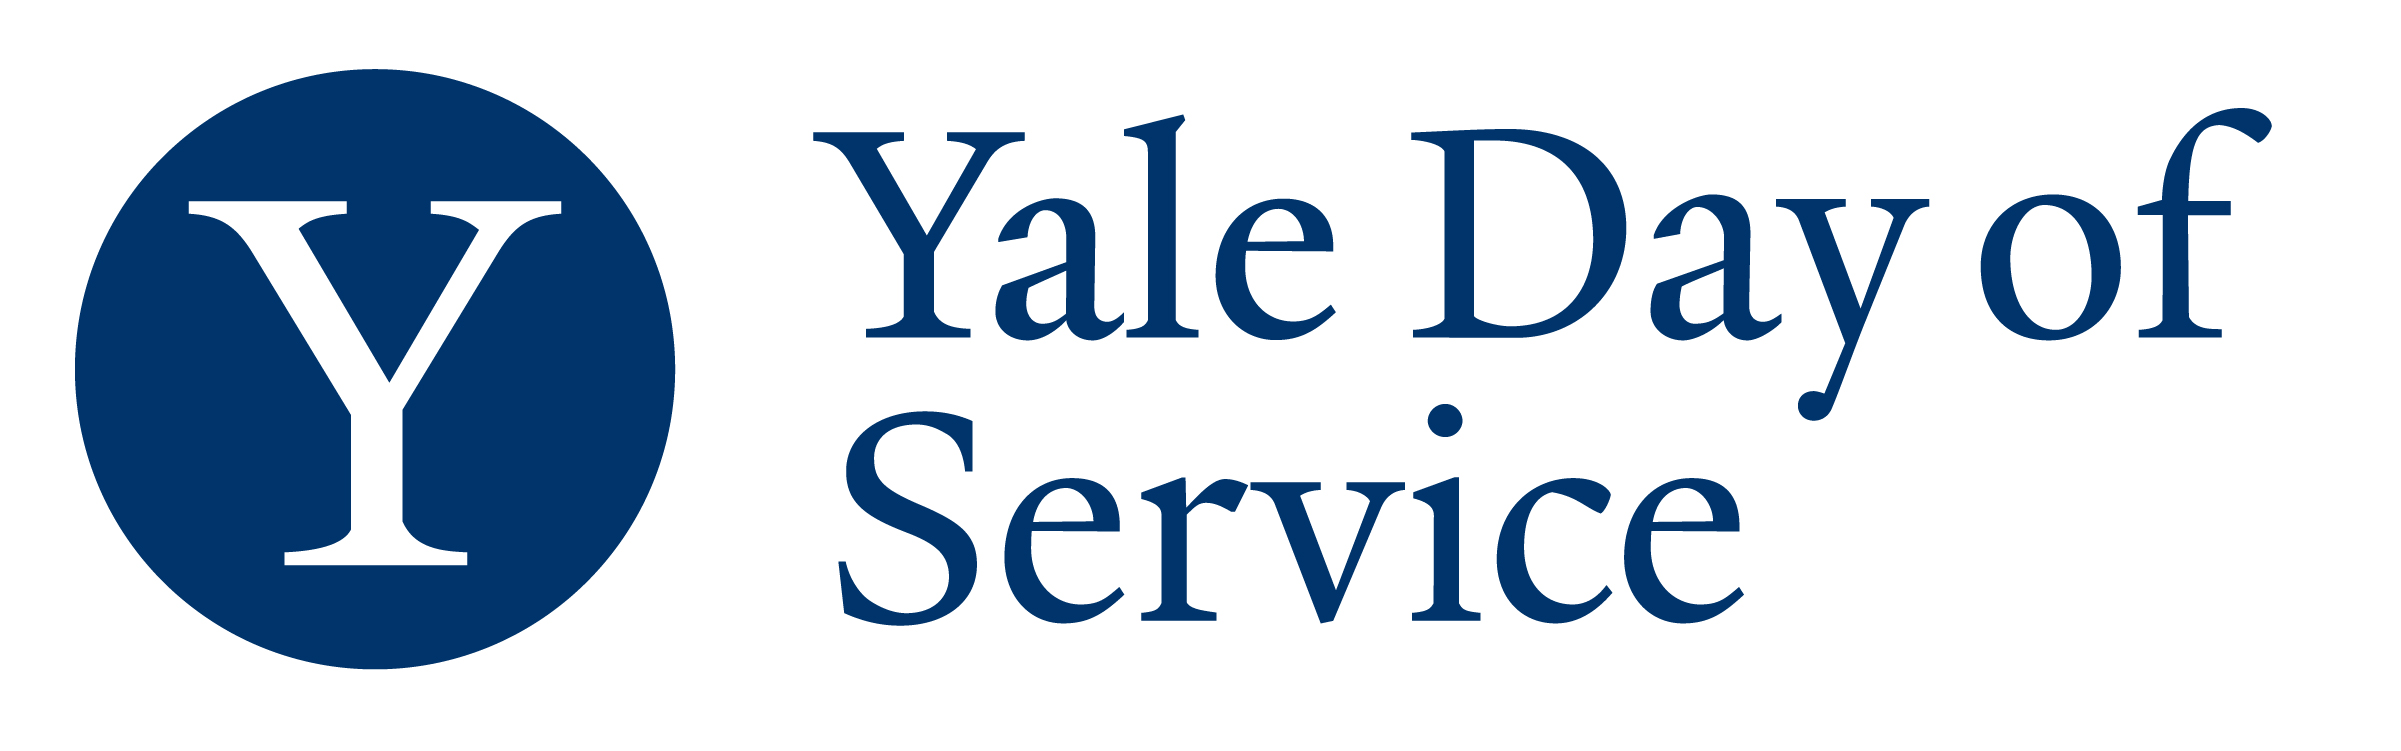 Yale Day of Service logo